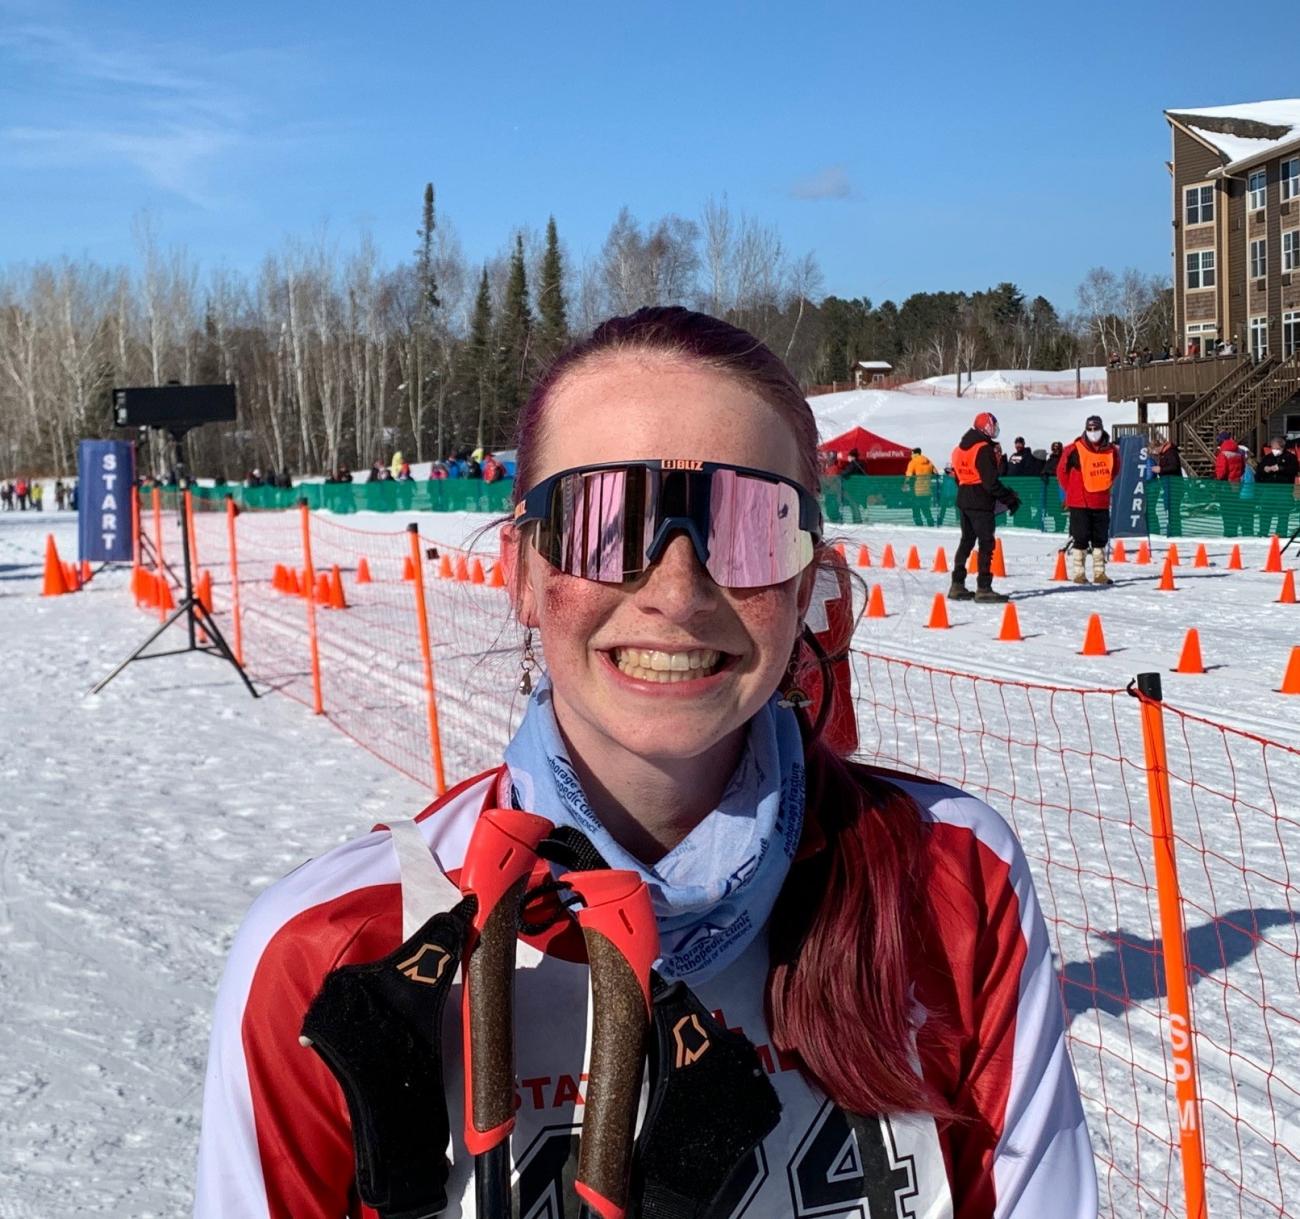 2021 Girls Nordic Ski Champion Molly Moening